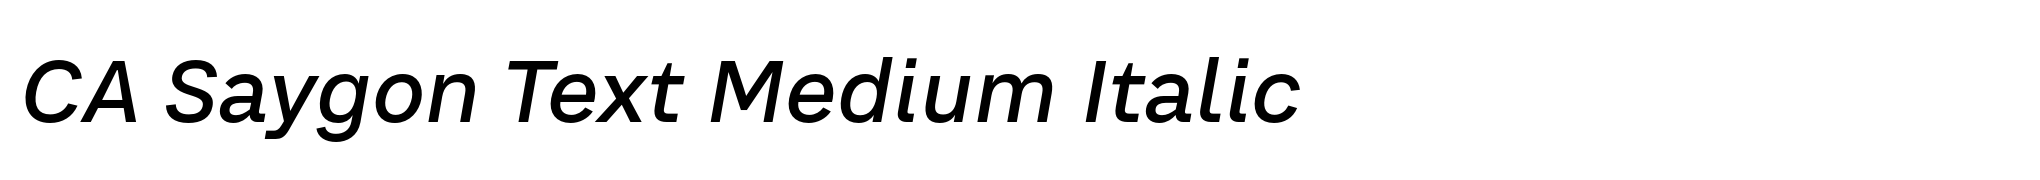 CA Saygon Text Medium Italic image